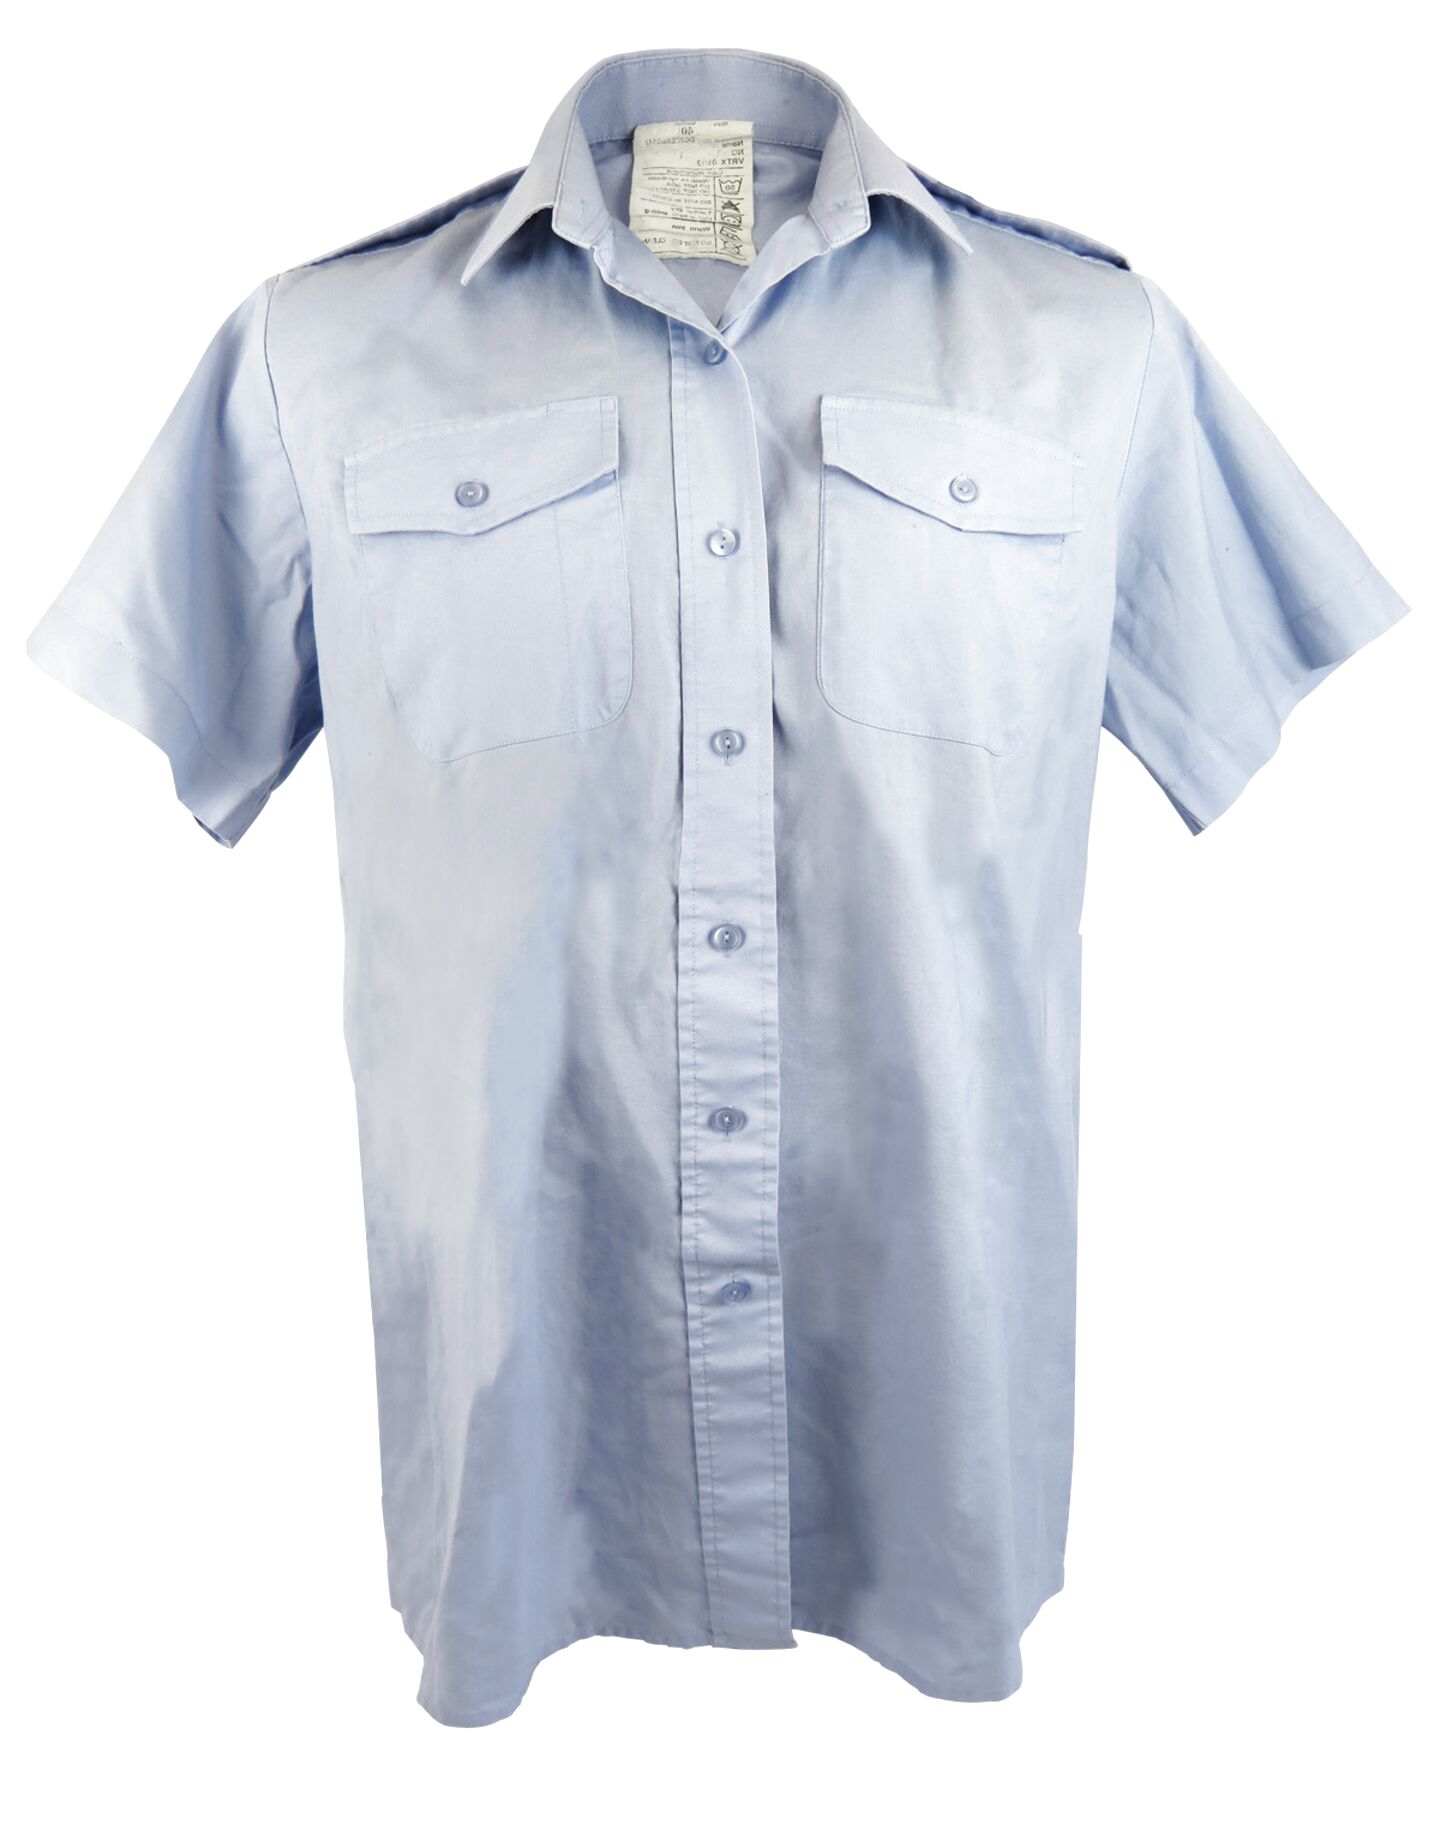 Raf Blue Shirt for sale in UK | 59 used Raf Blue Shirts